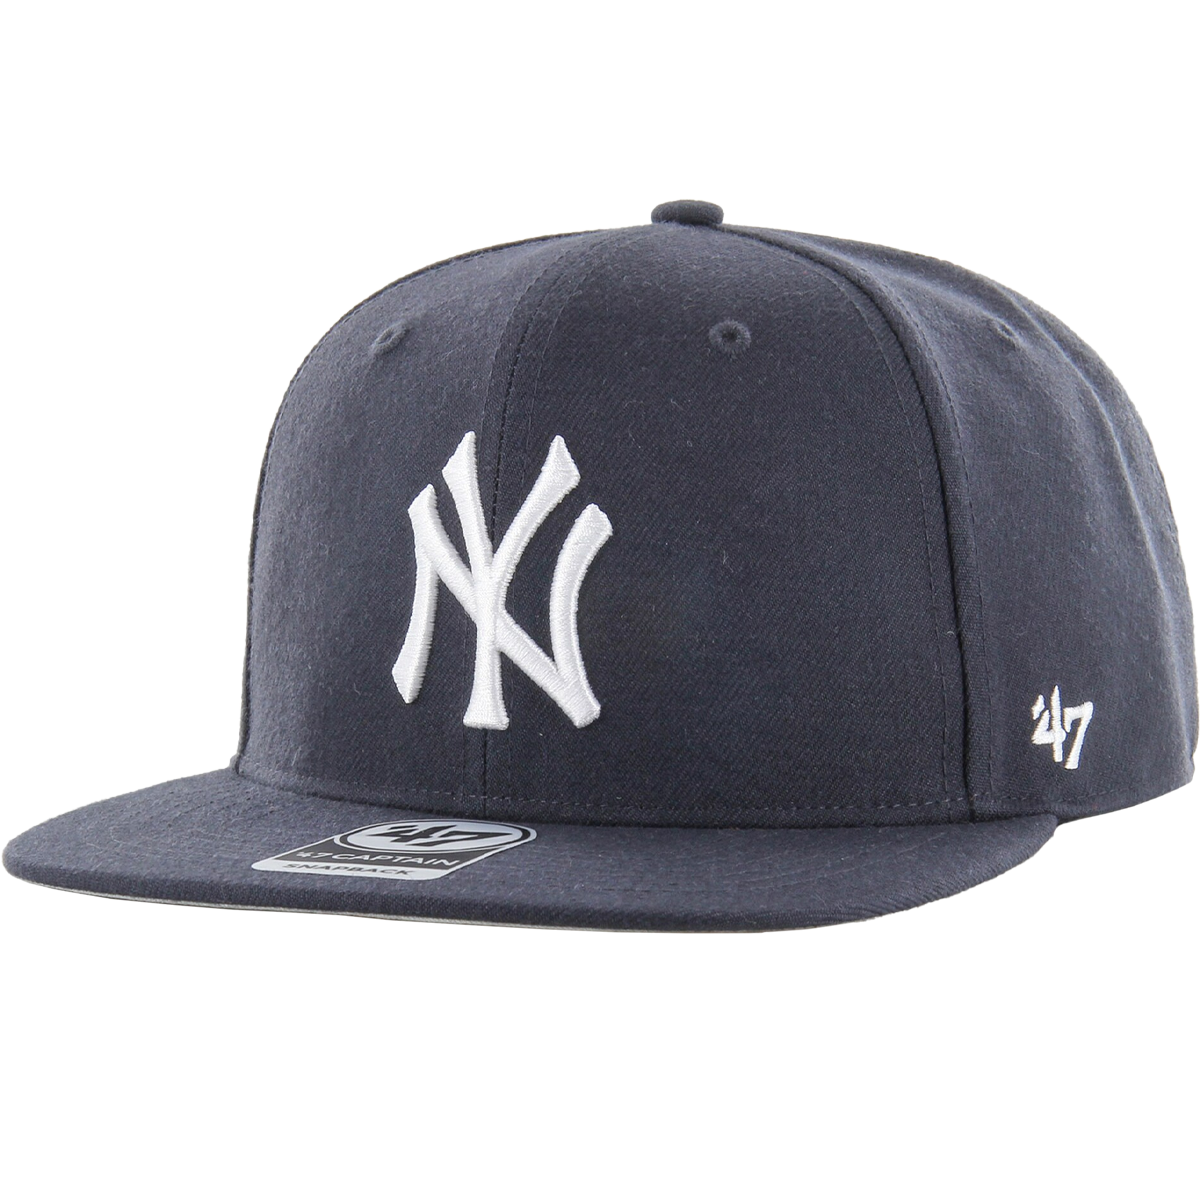 47 Navy New York Yankees 1996 World Series Sure Shot Captain Snapback Hat